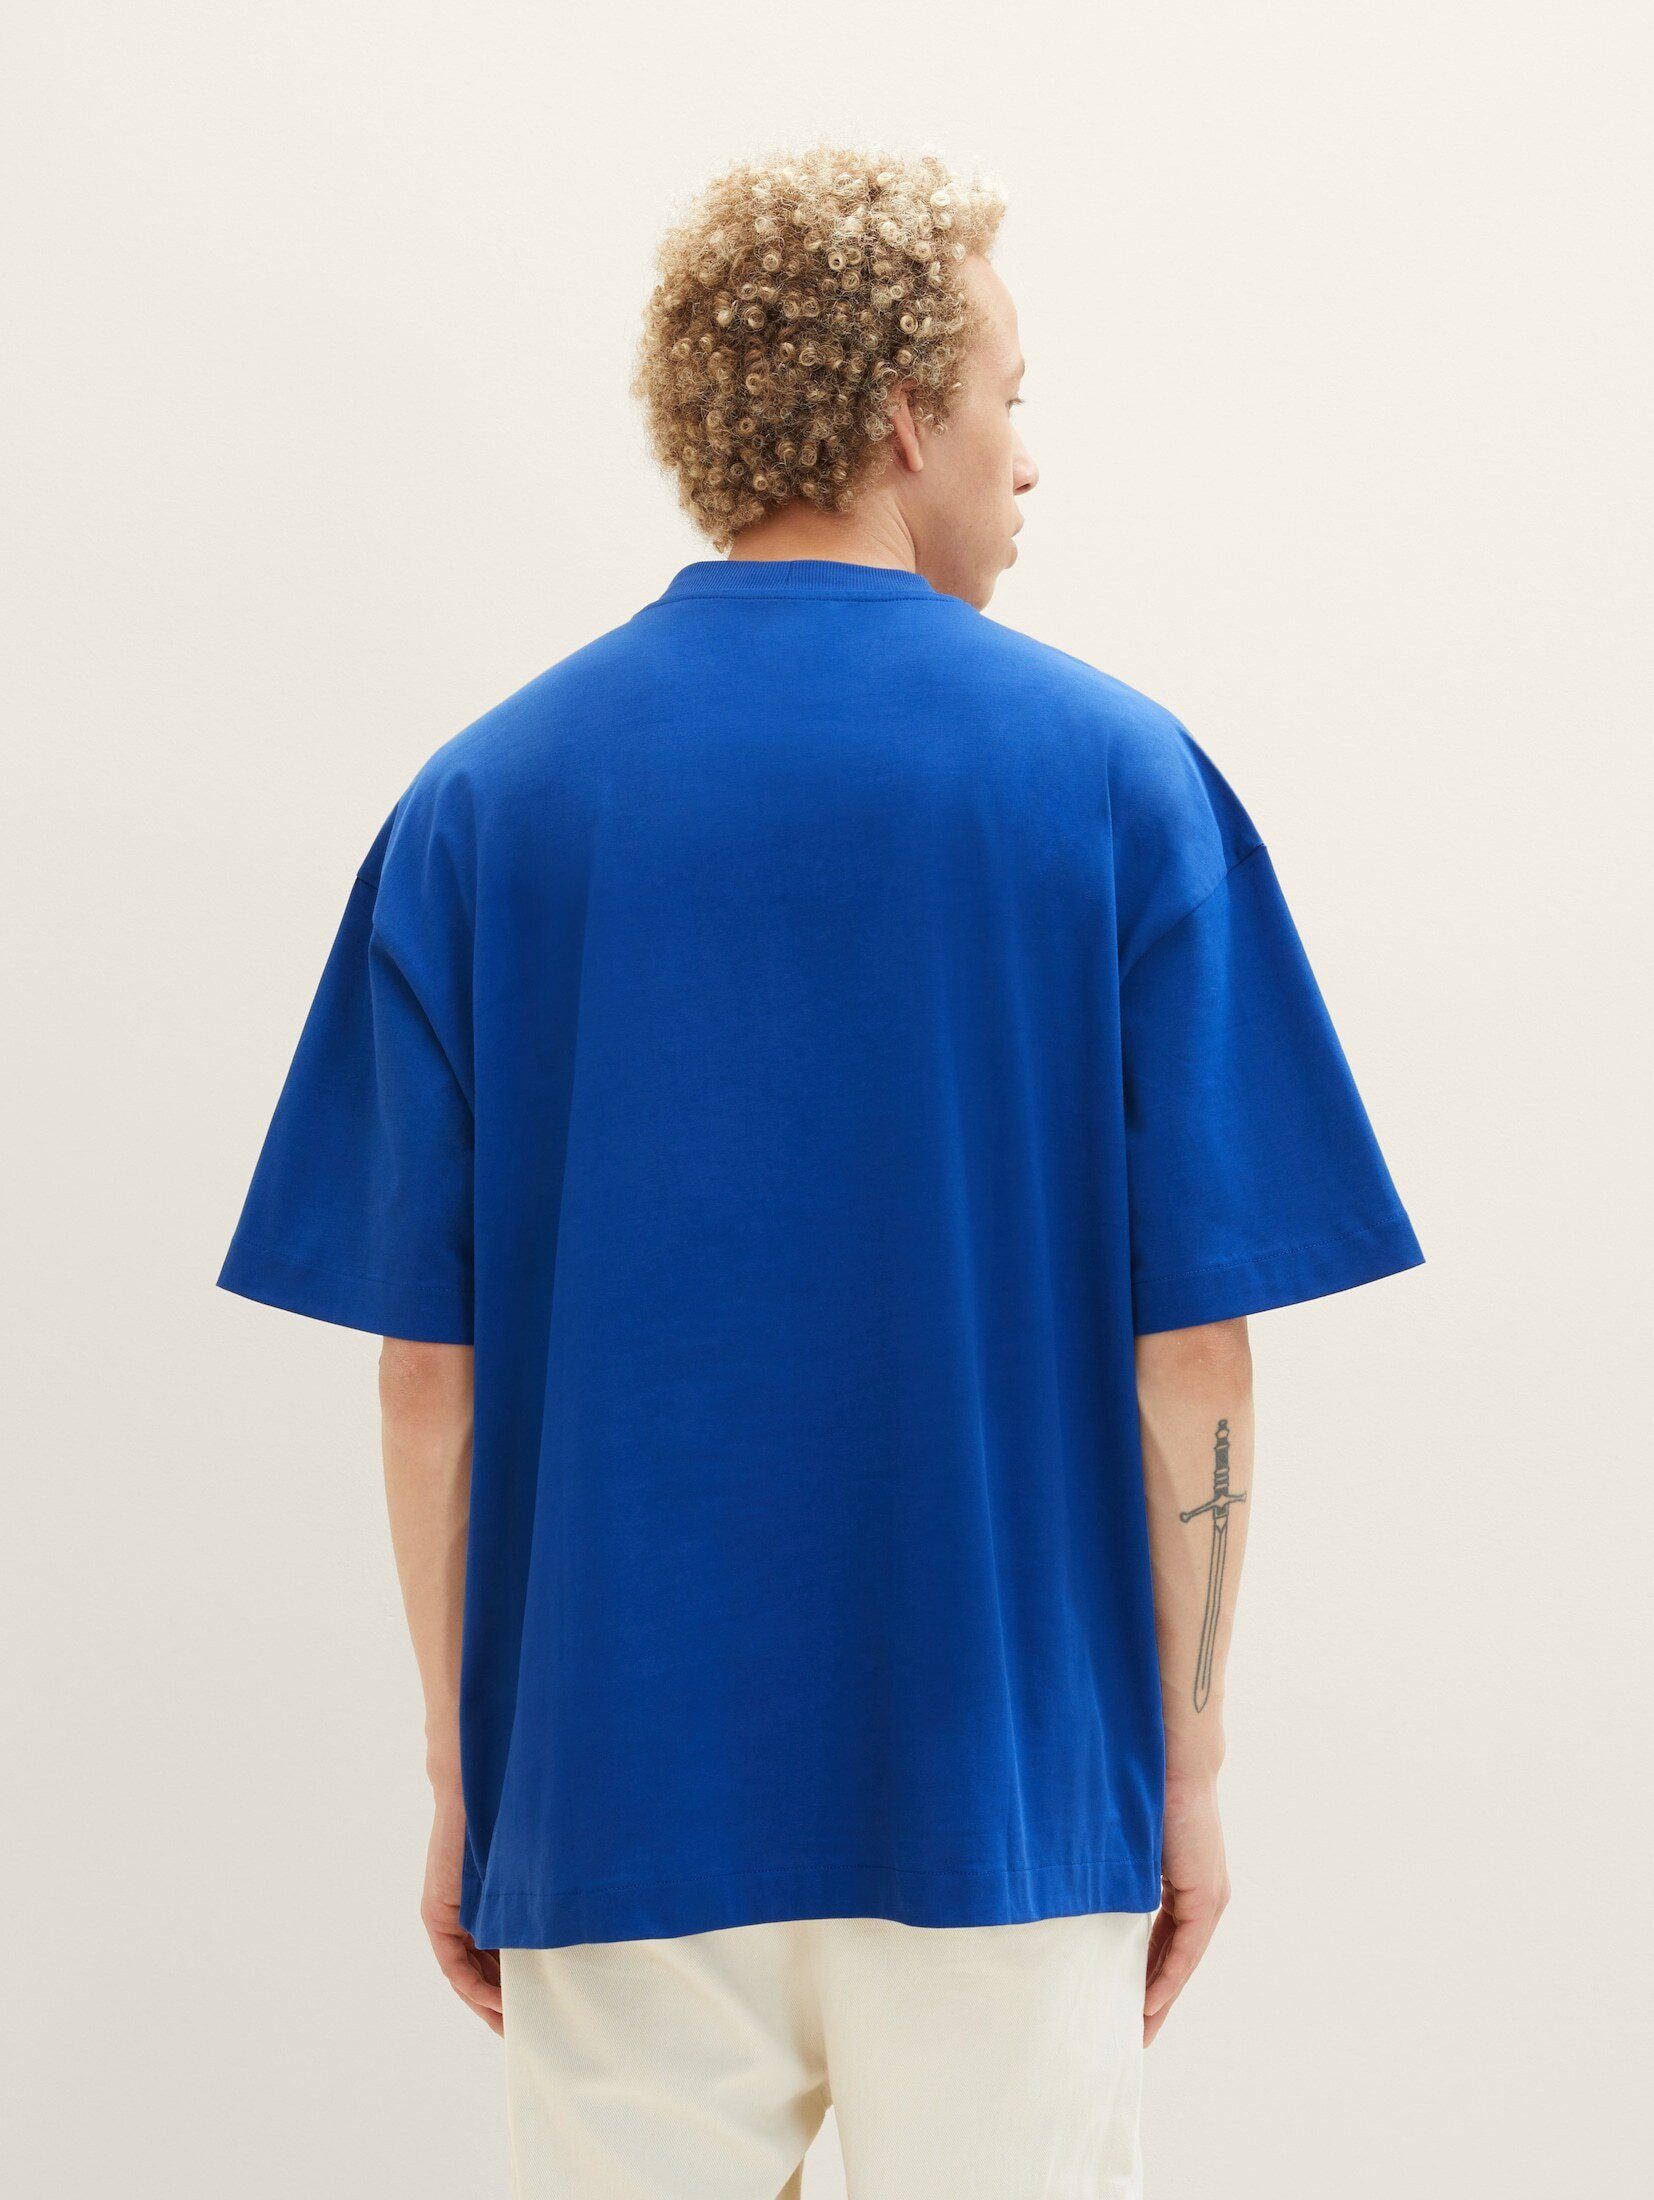 TOM TAILOR Denim T-Shirt blue Applikation royal Oversized T-Shirt shiny mit